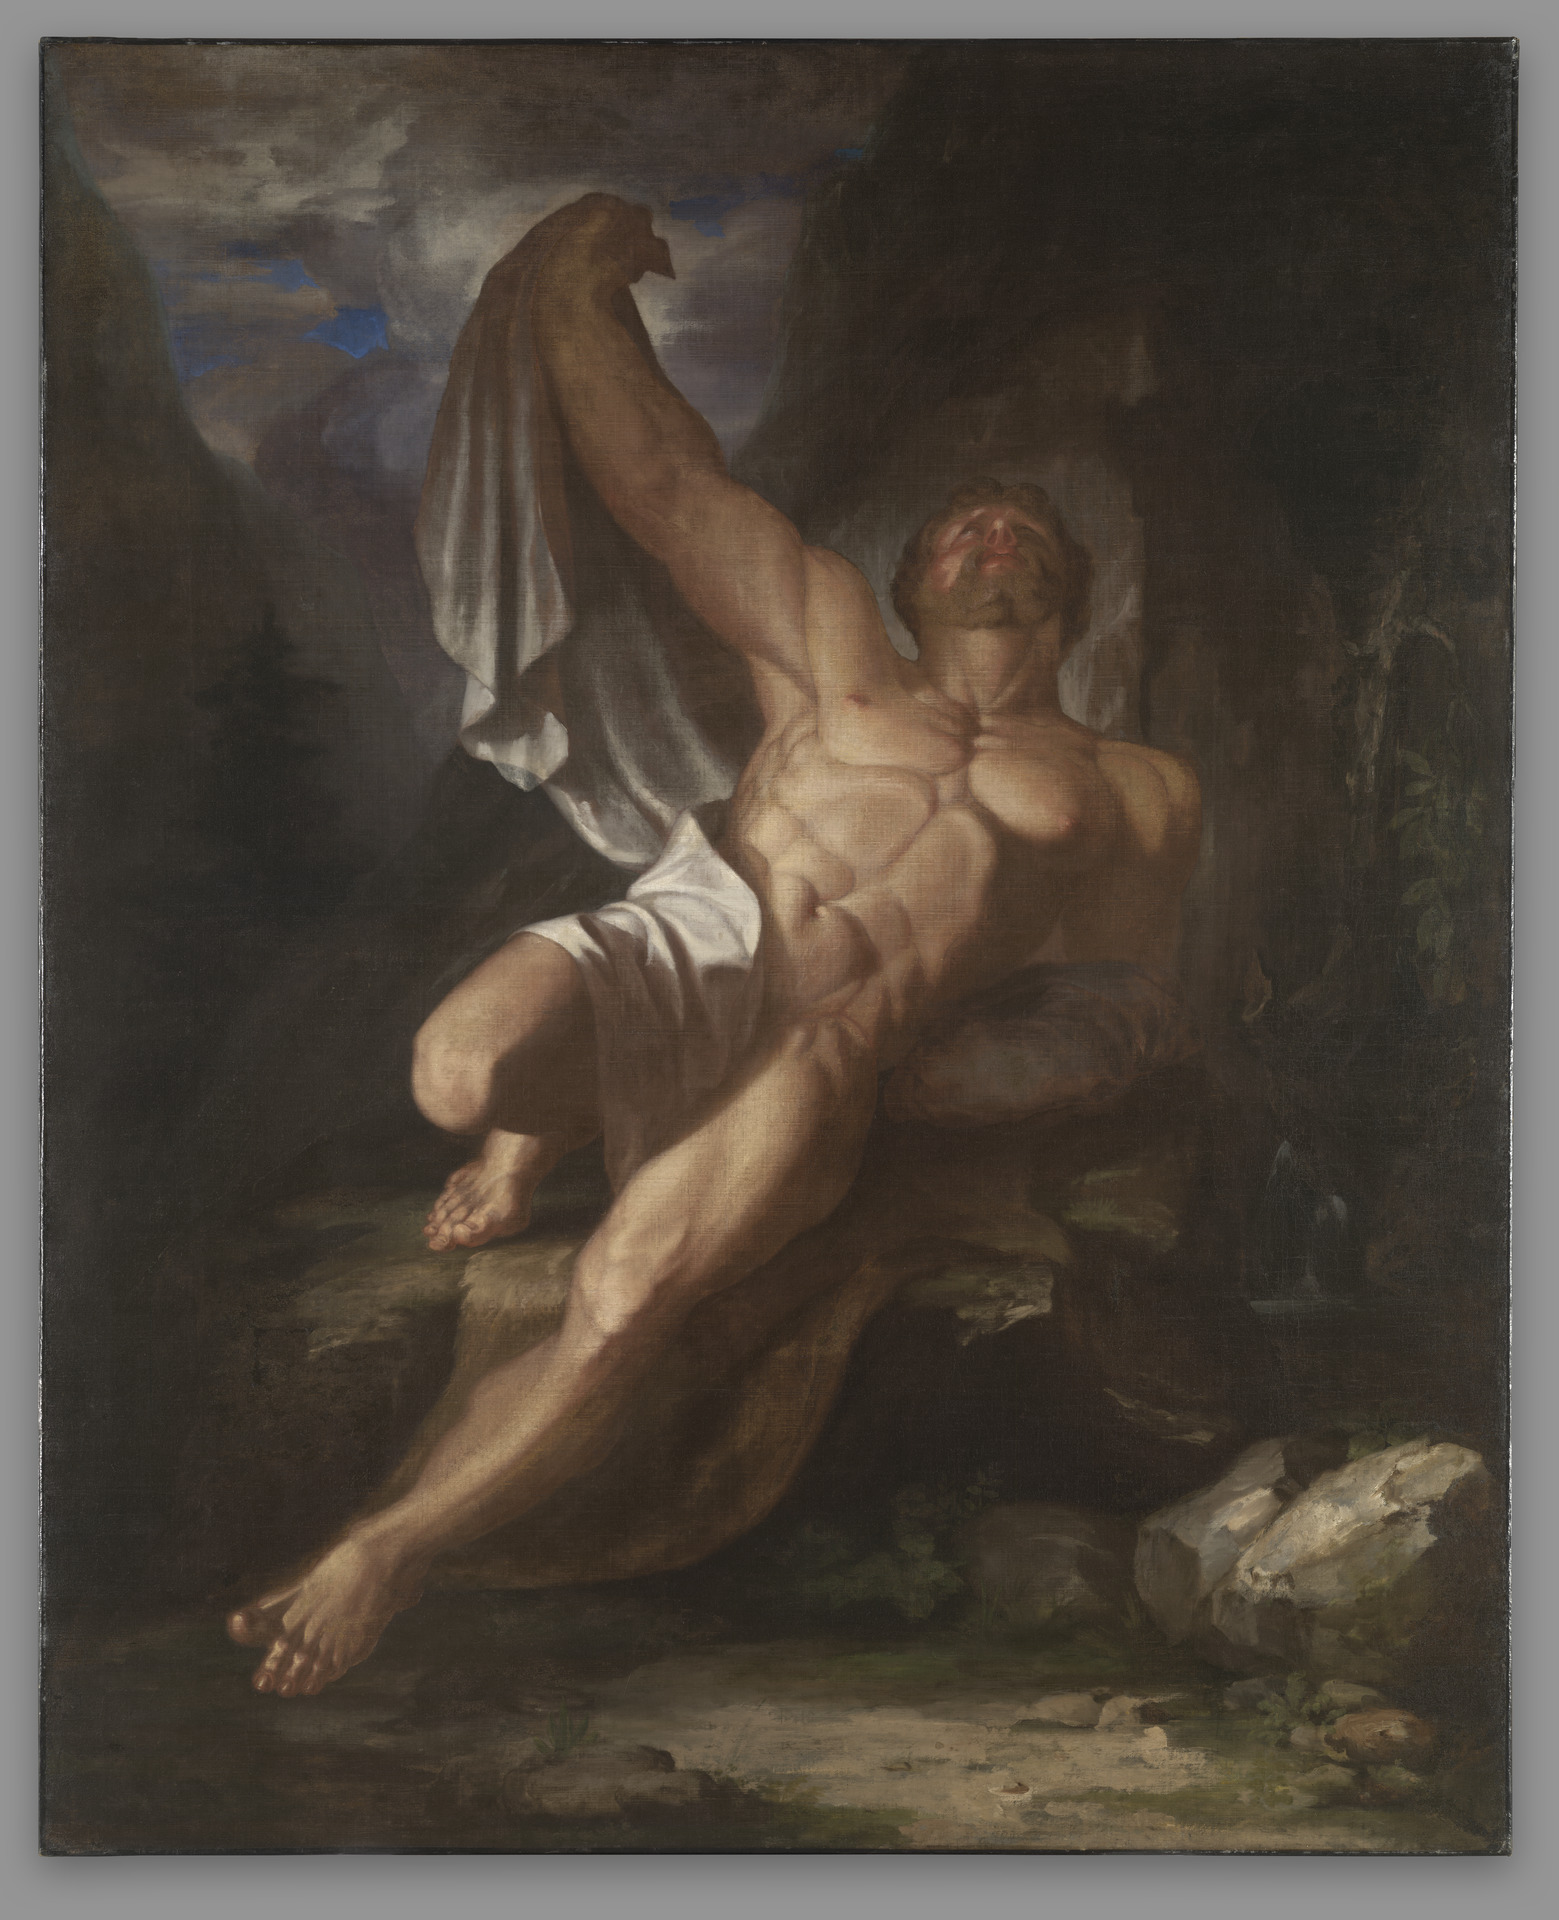 Dying Hercules by Samuel Morse, 1812